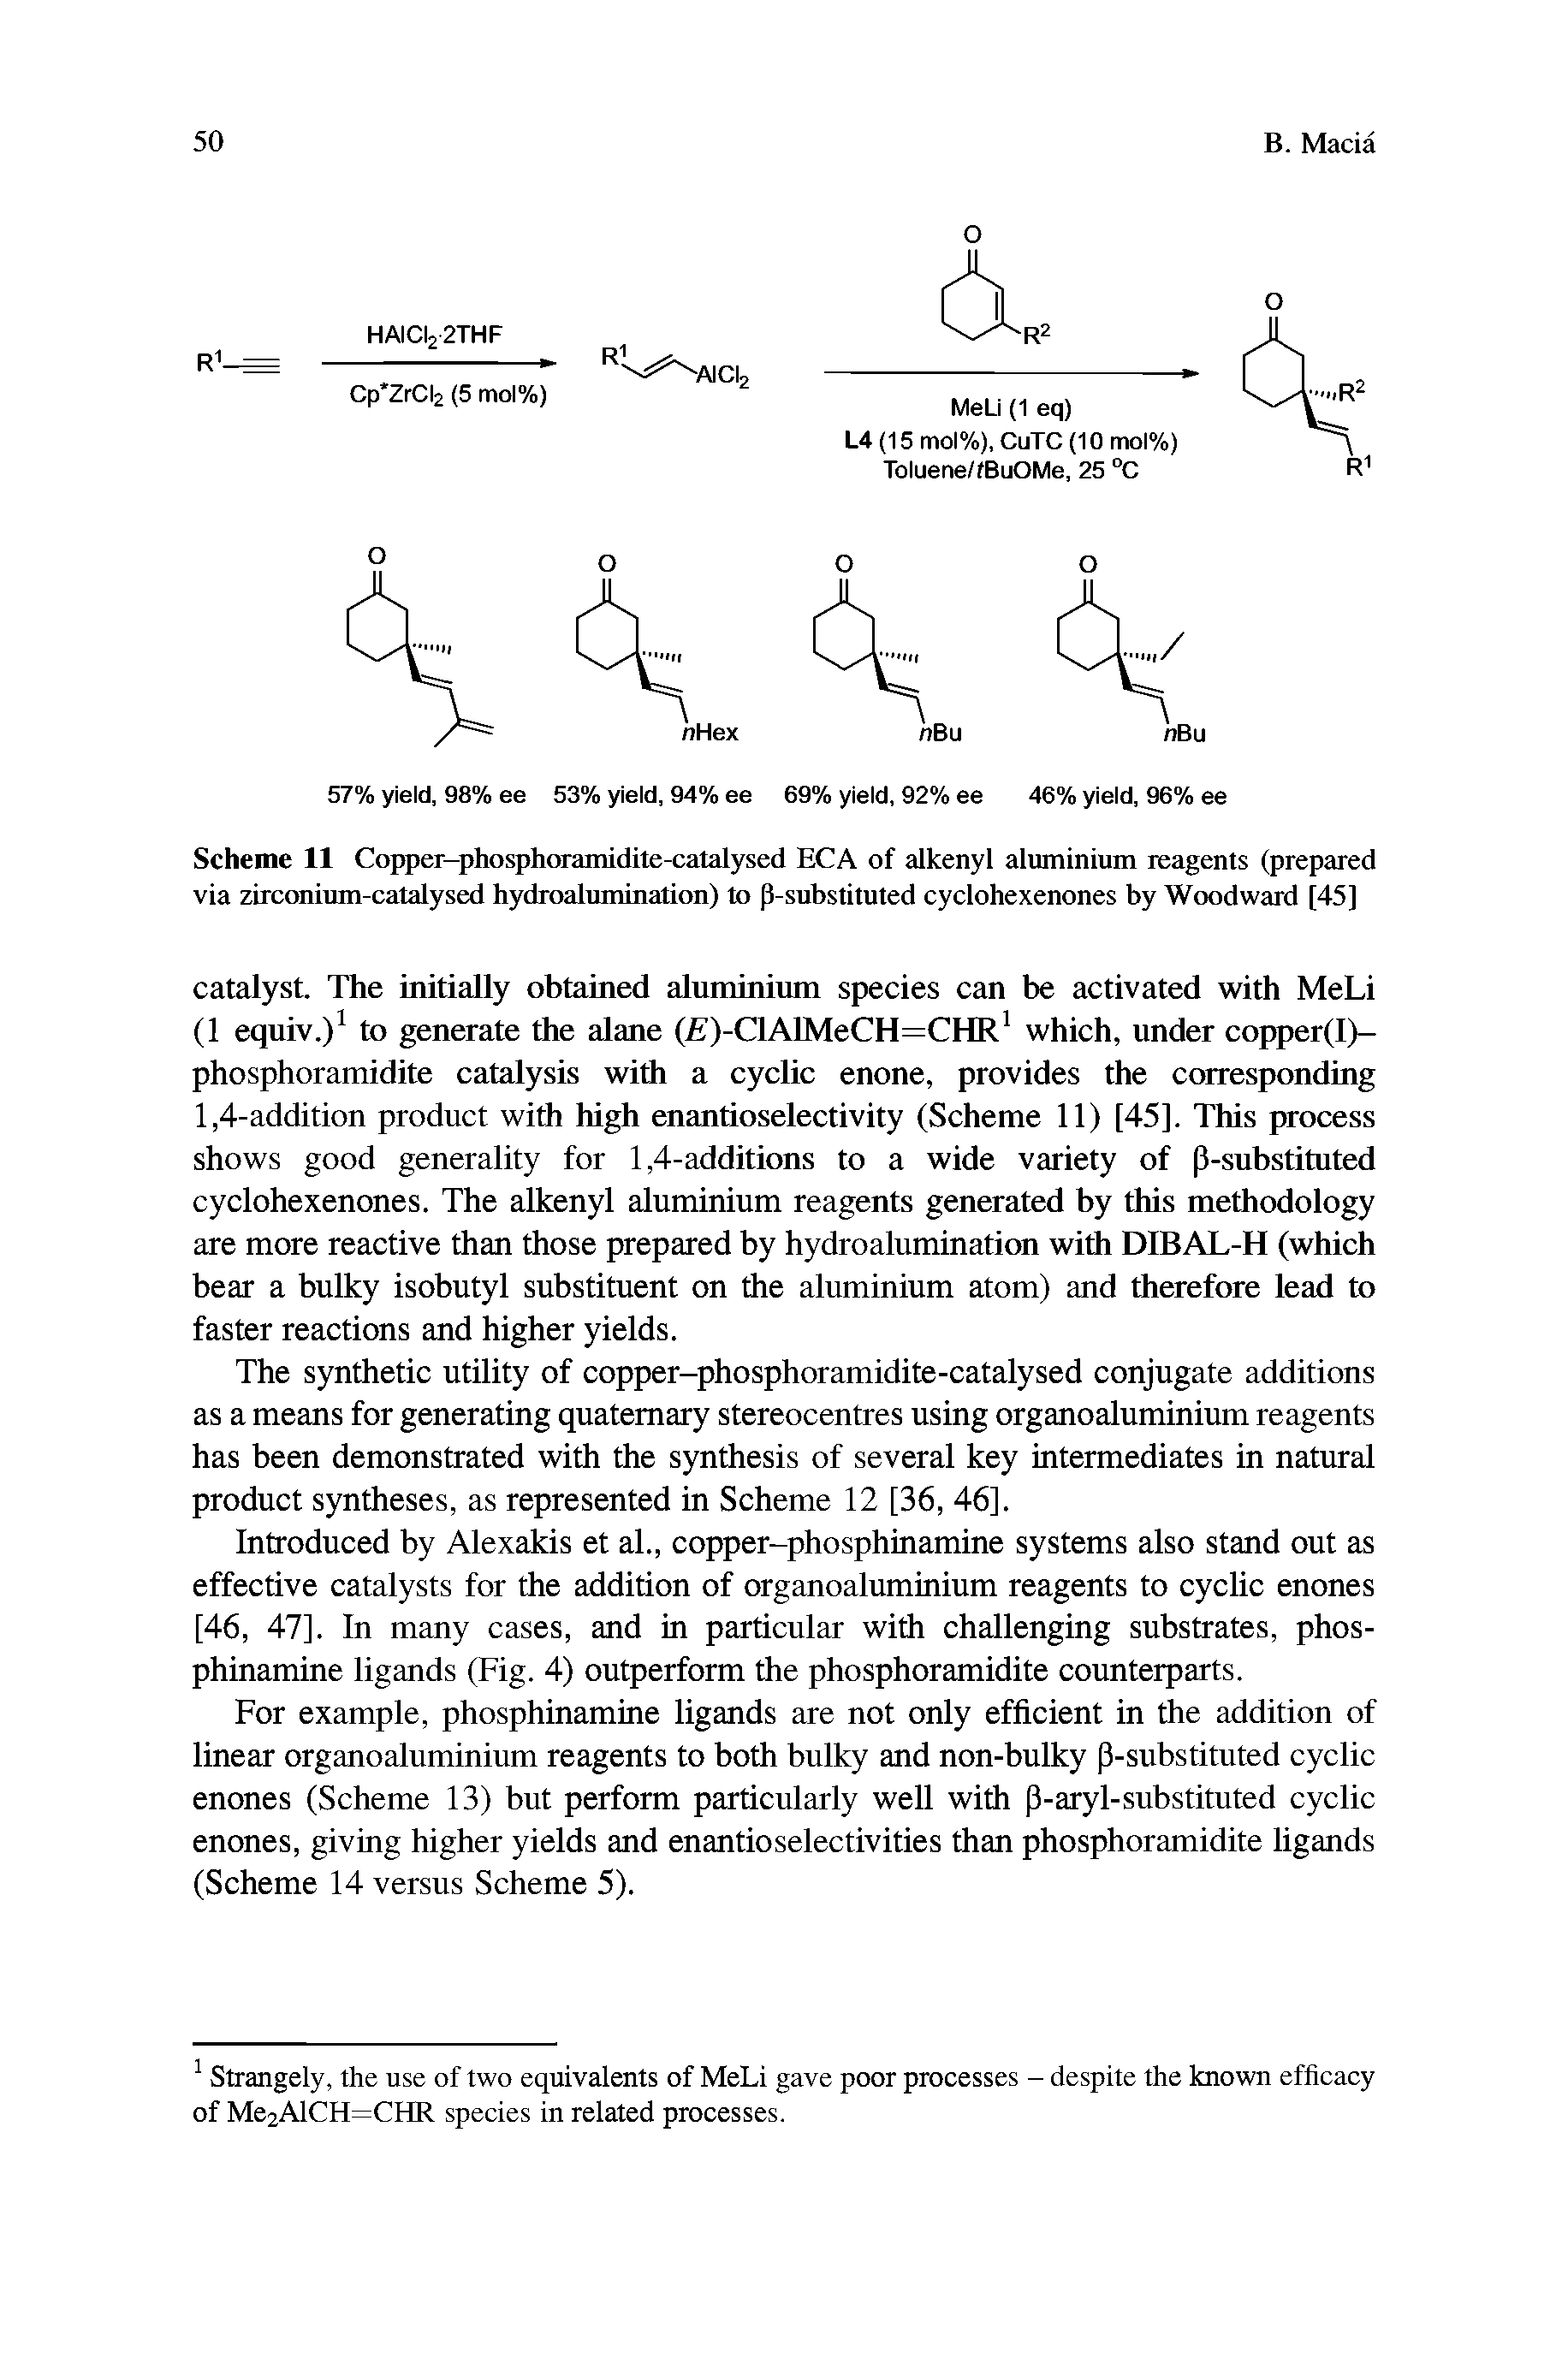 Scheme 11 Copper-phosphoramidite-catalysed ECA of alkenyl aliuninium reagents (prepared via zirconium-catalysed hydroalumination) to p-substituted cyclohexenones by Woodward [45]...